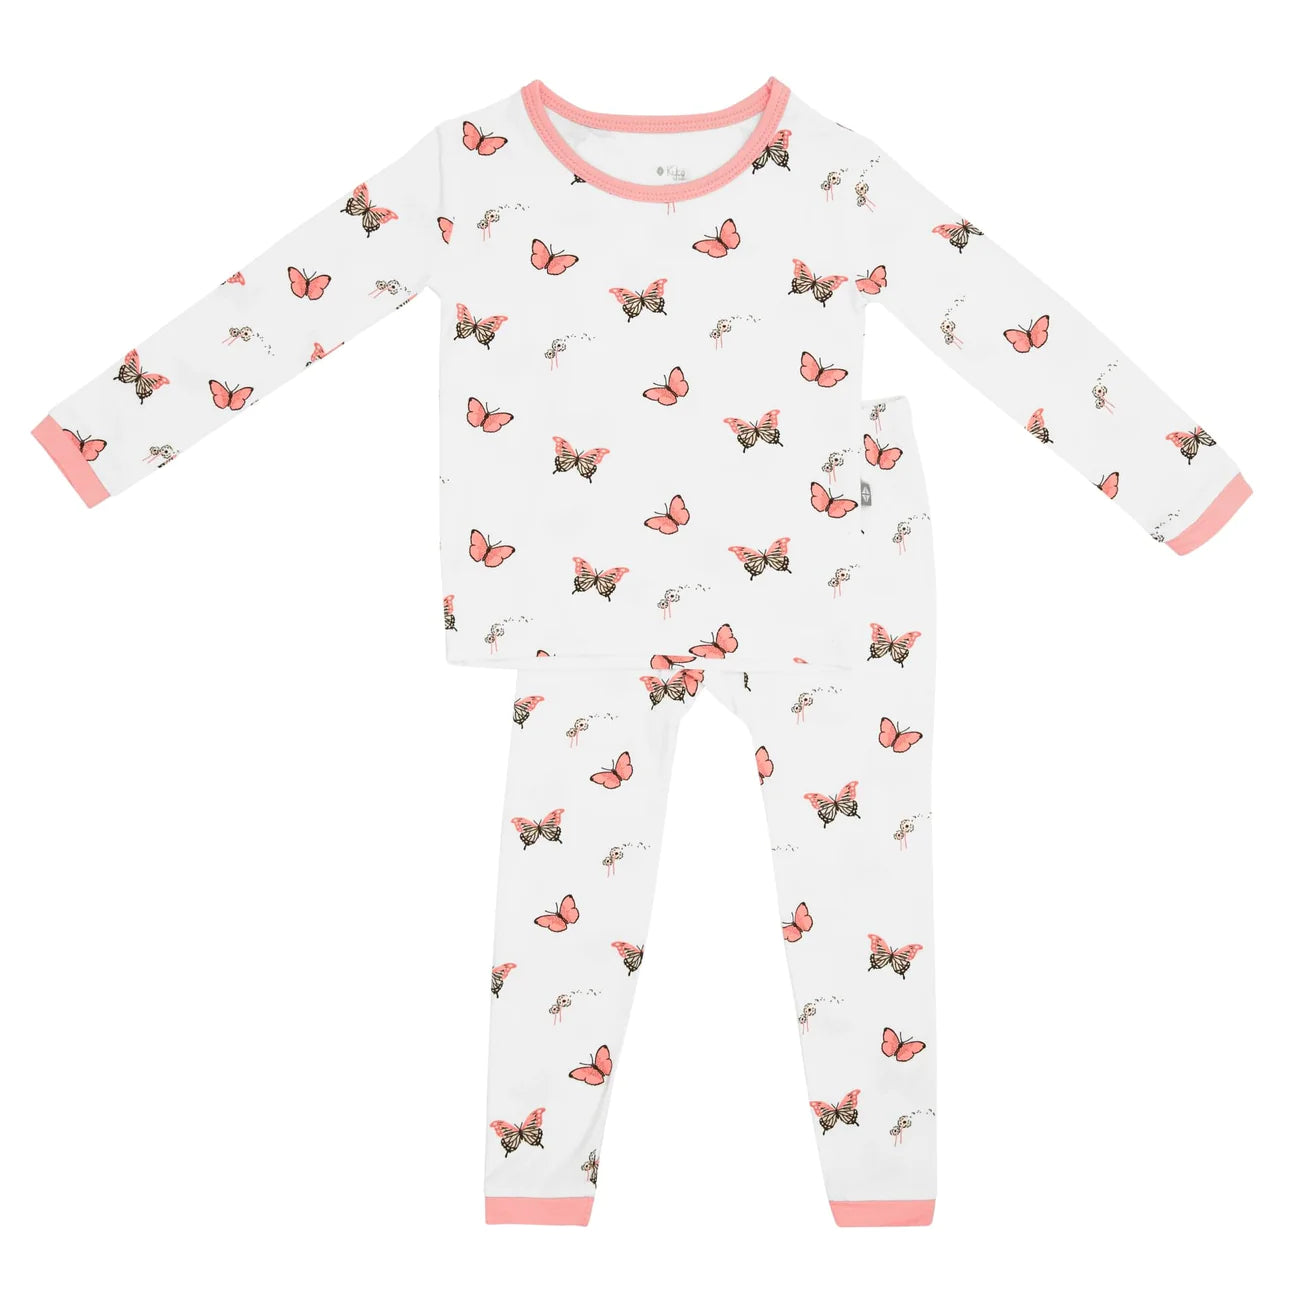 Butterfly Print Toddler Pajama Set